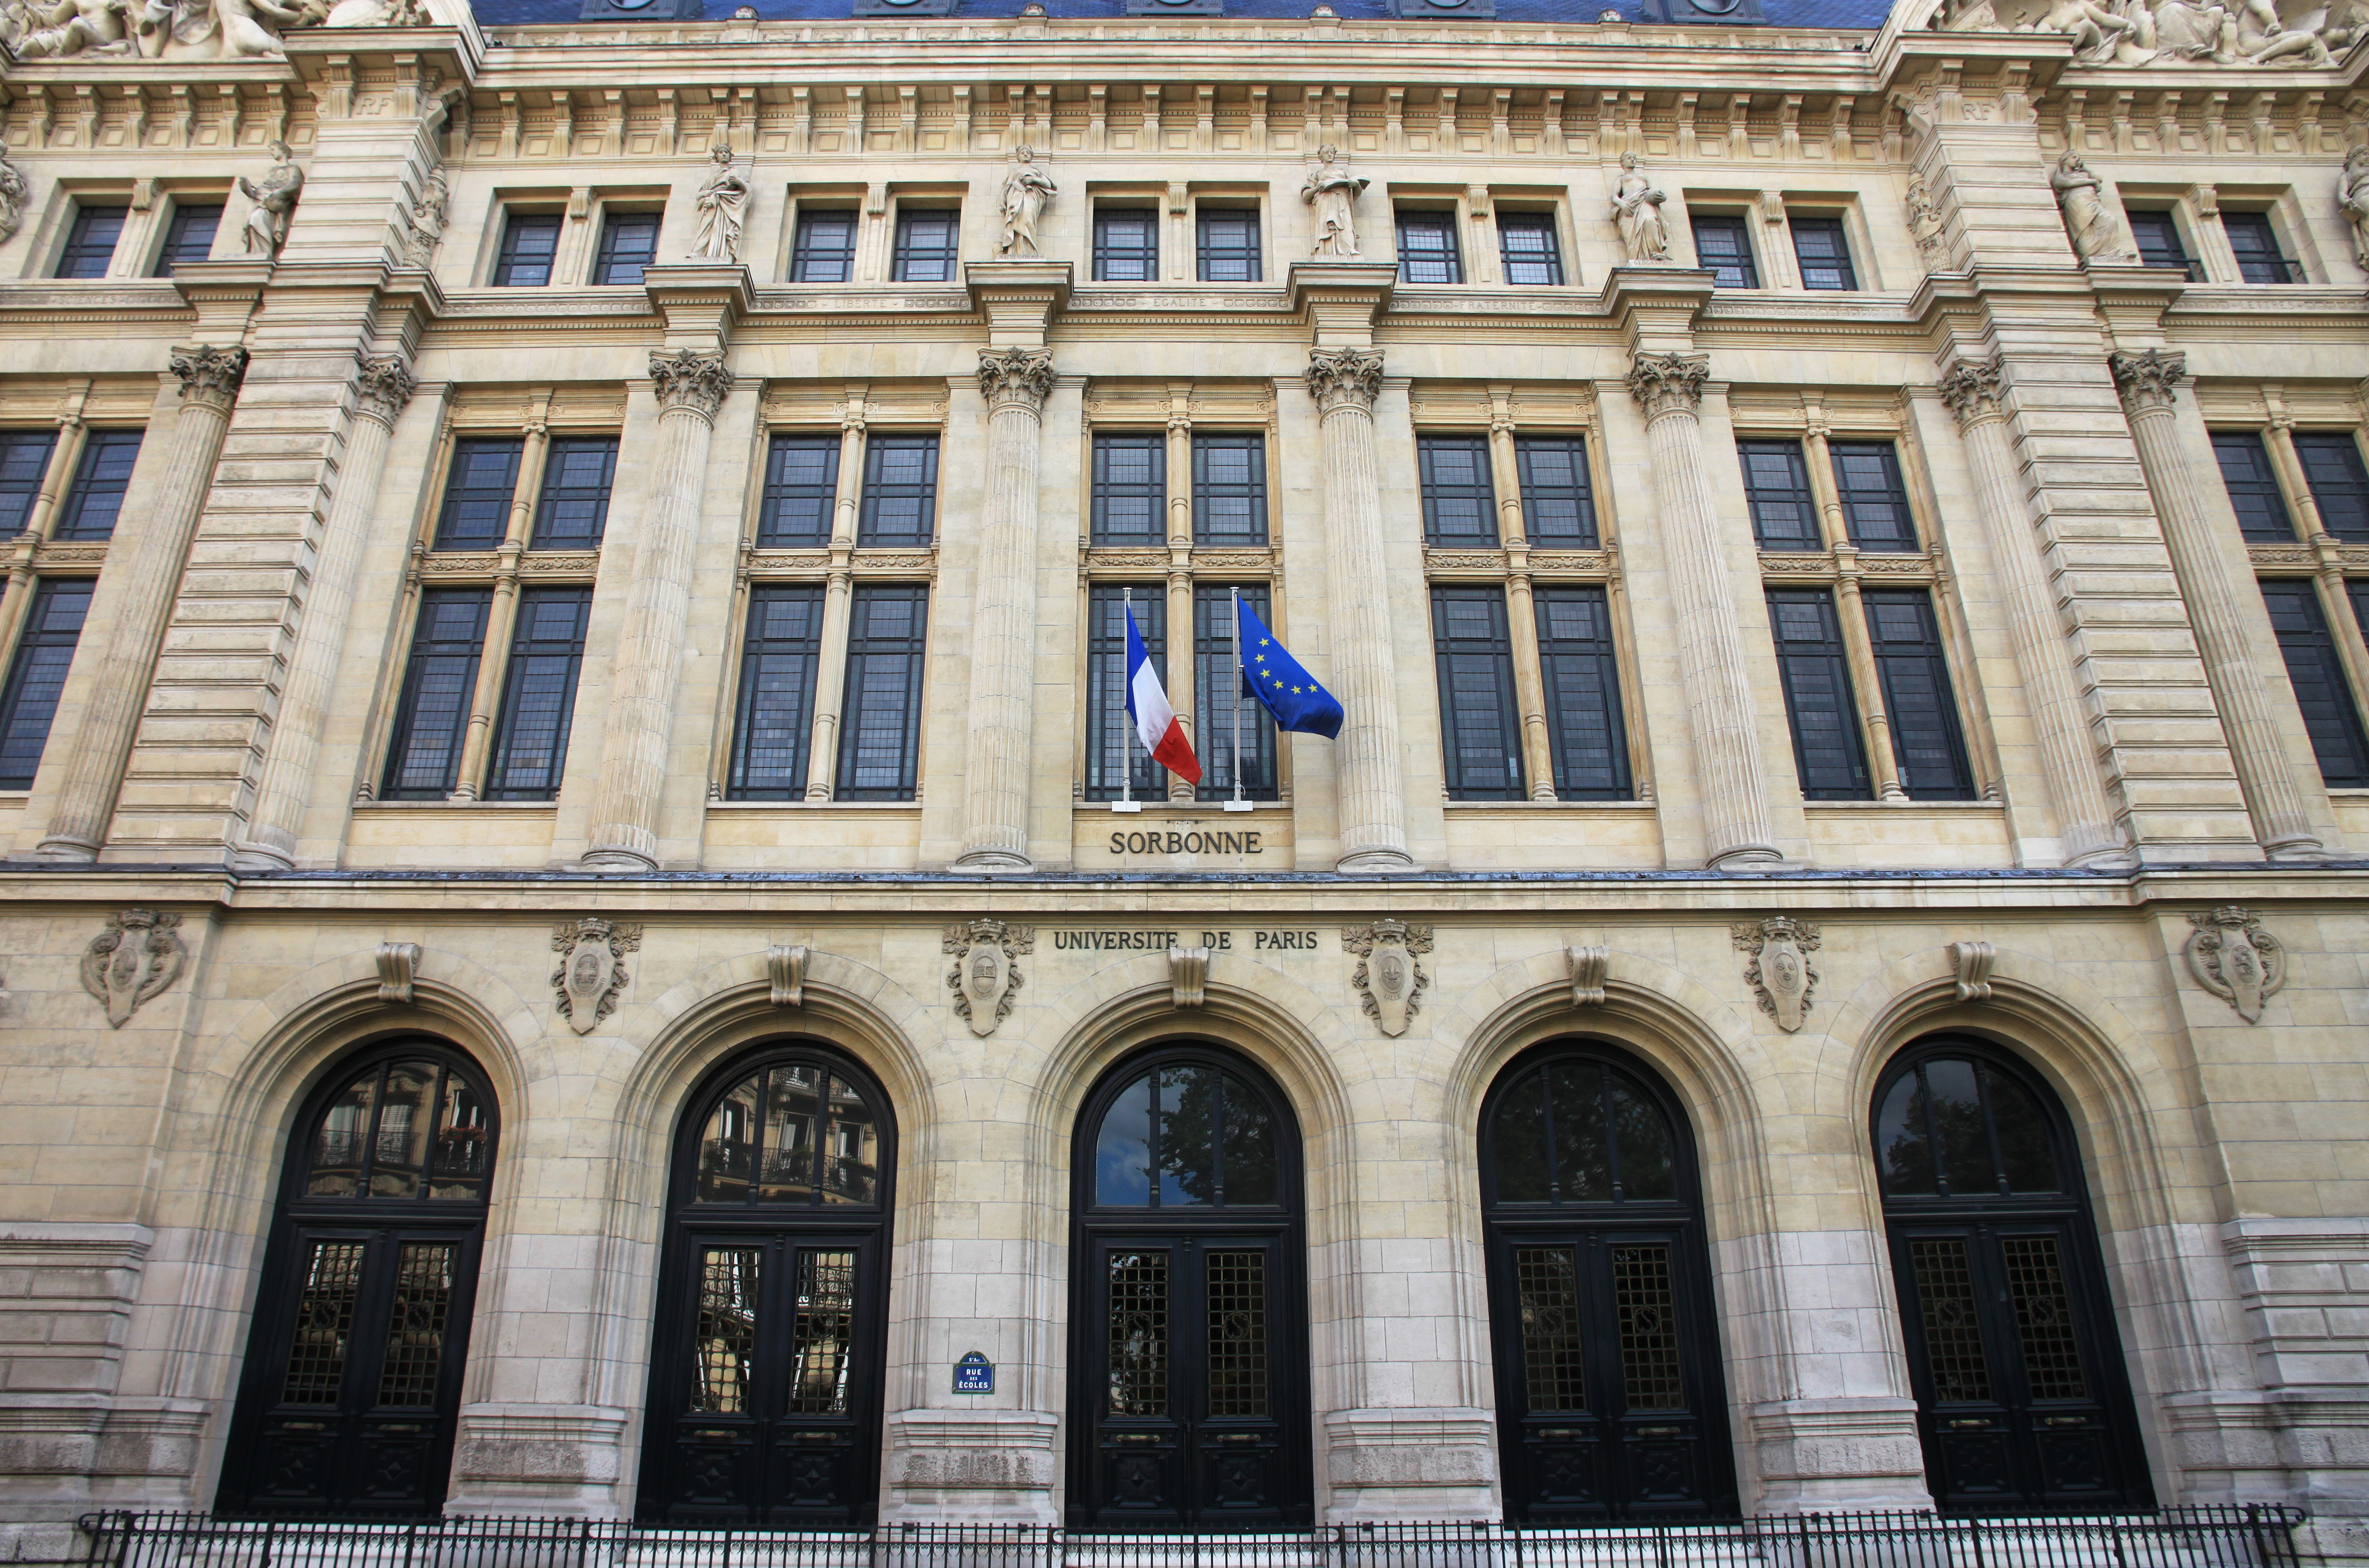 File:Sorbonne university main building entrance.jpg - Wikimedia Commons